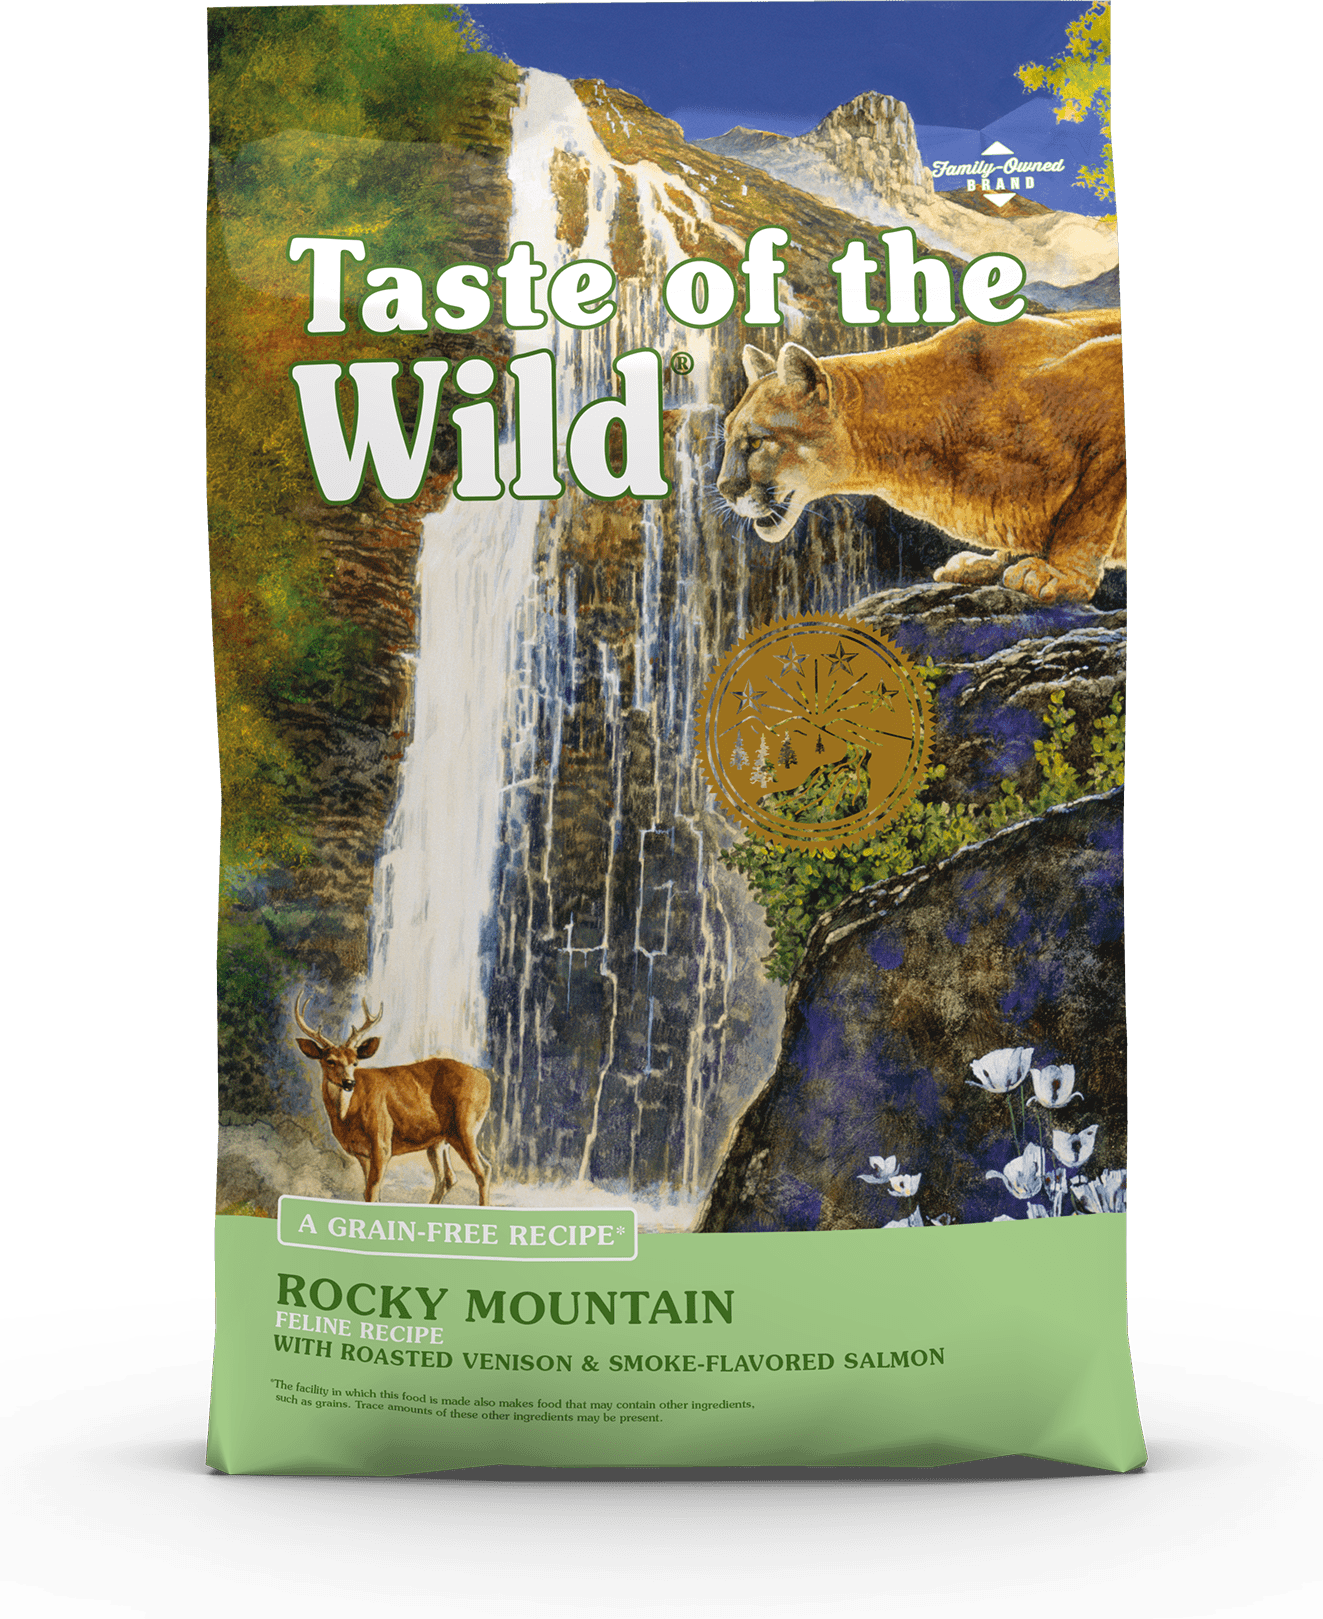 Taste Of The Wild Rocky Mountain Recipe With Roasted Venison & Smoke-Flavored Salmon